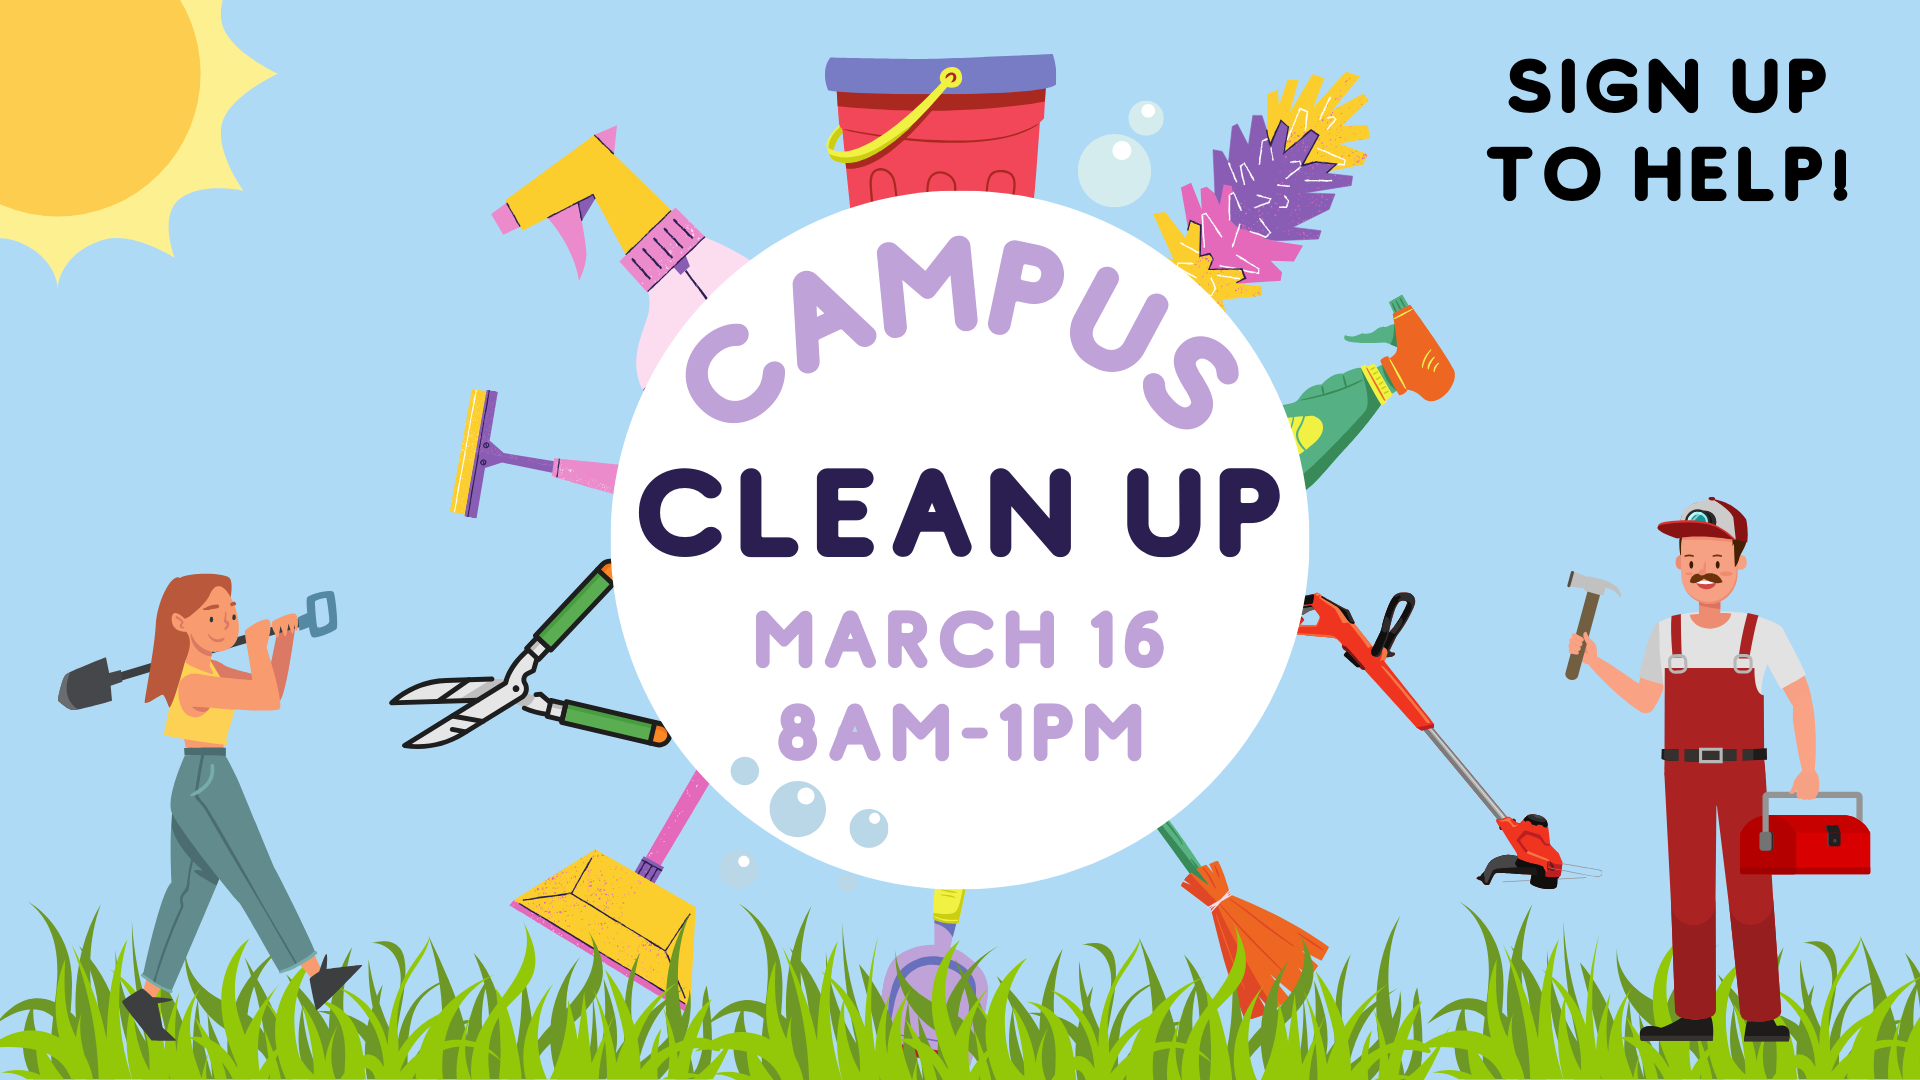 Campus cleanup